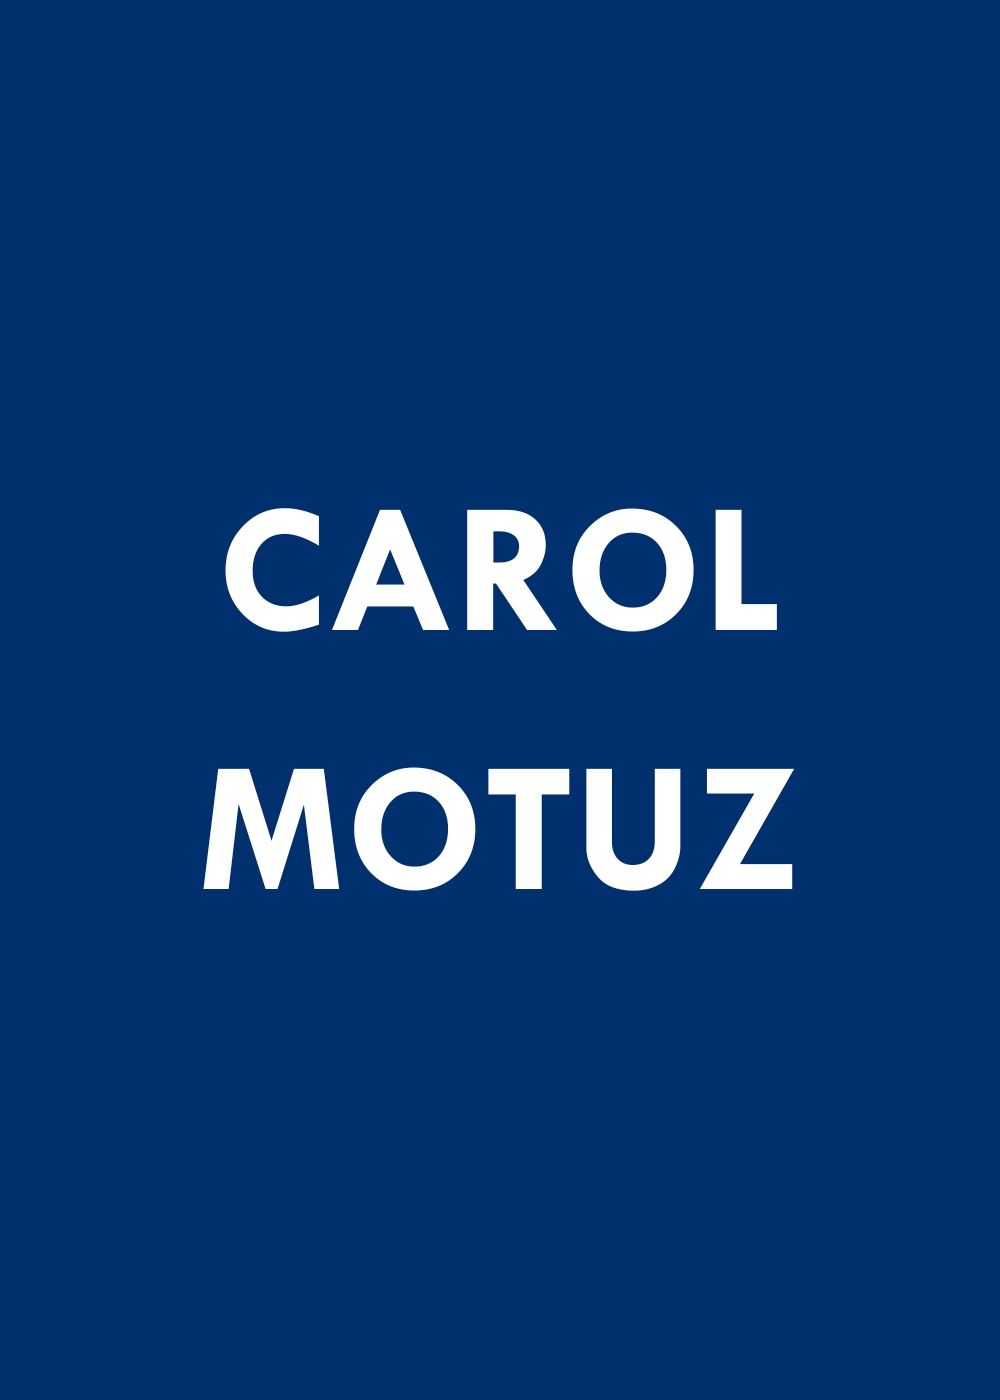 Carol Motuz